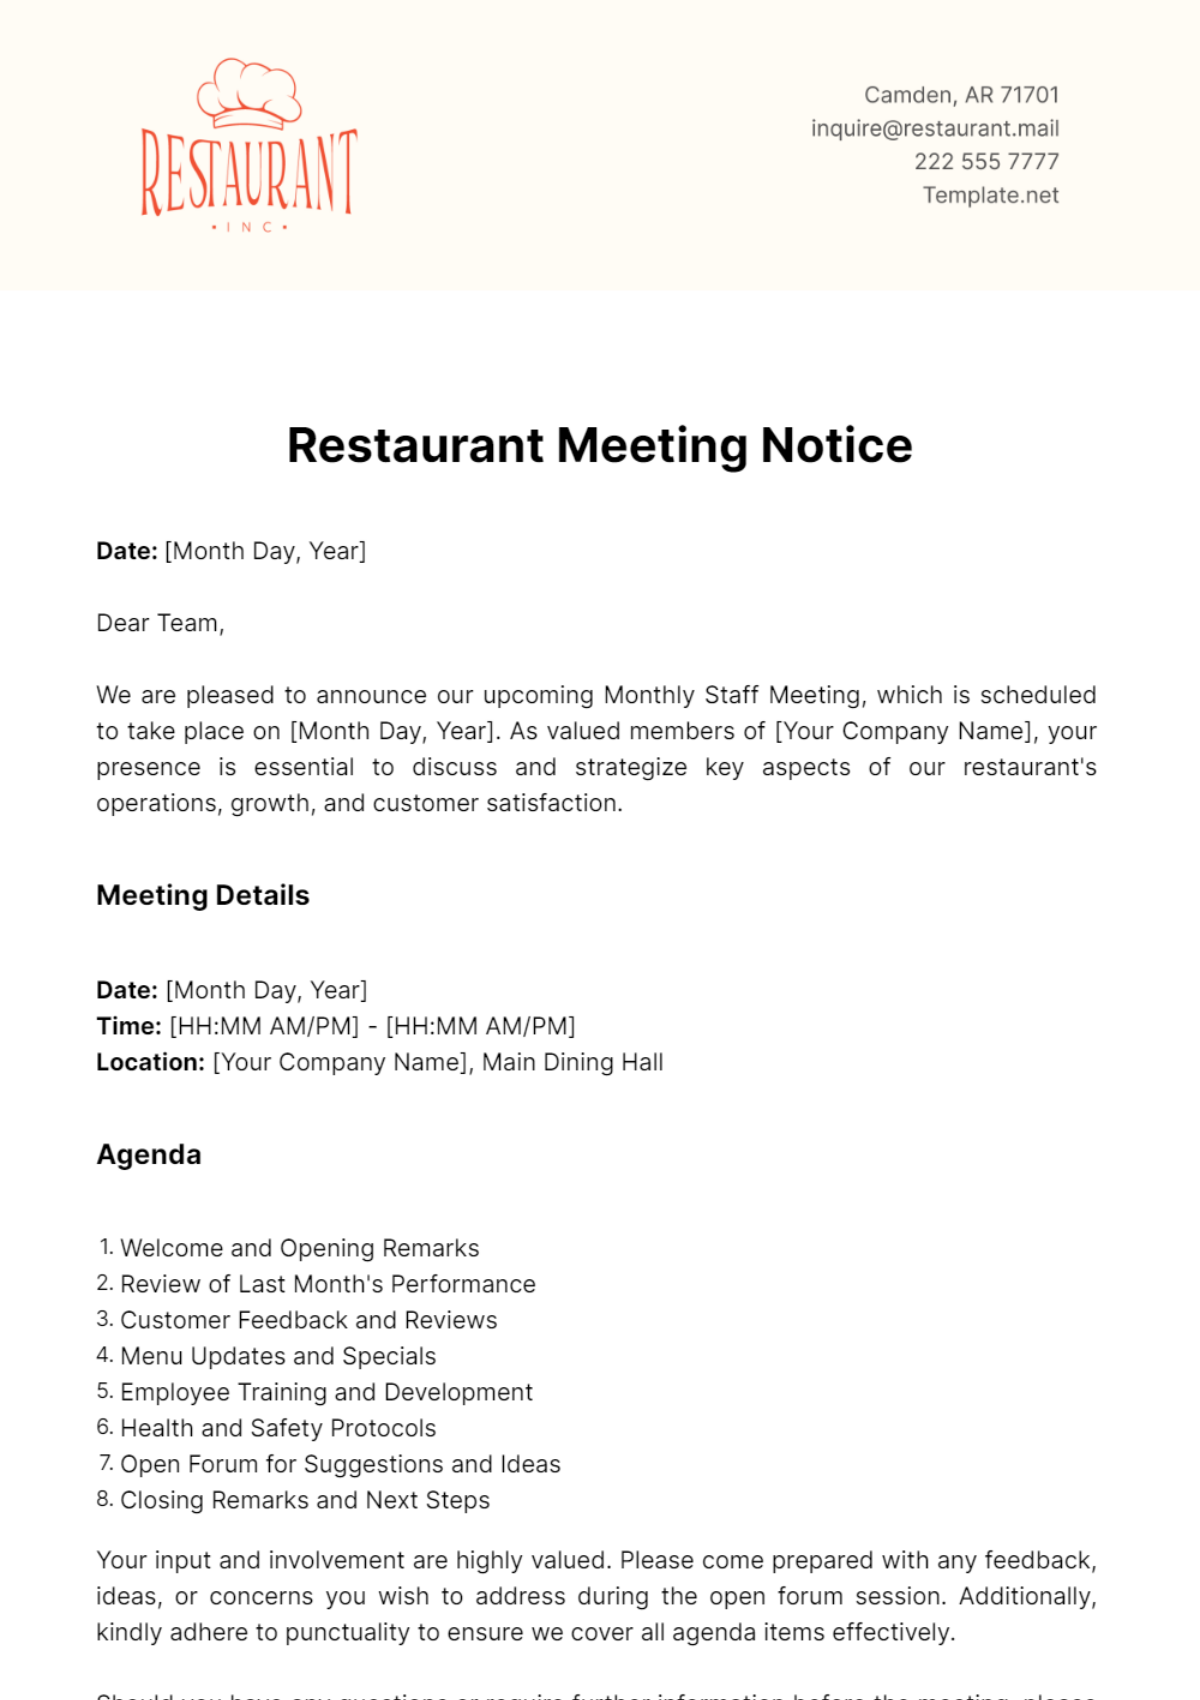 Free Restaurant Meeting Notice Template